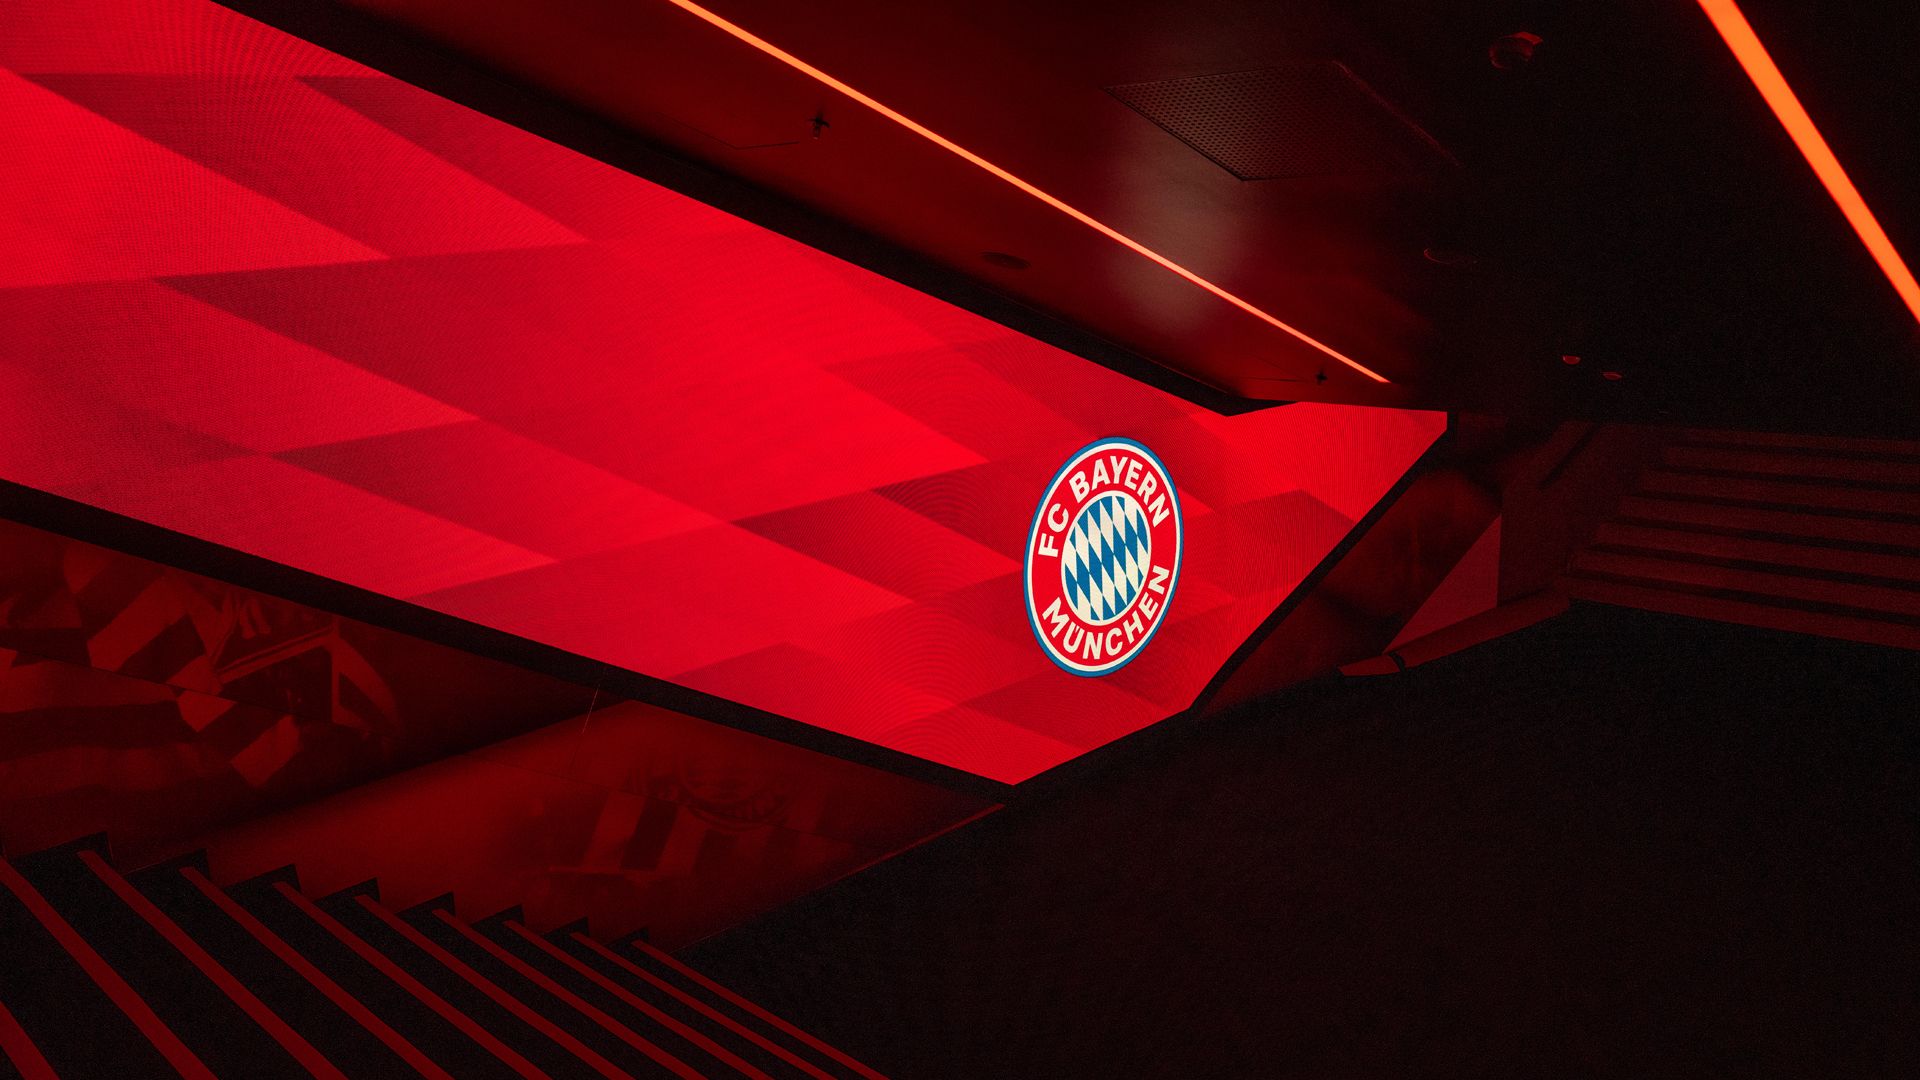 Wallpaper: Allianz Arena screen background